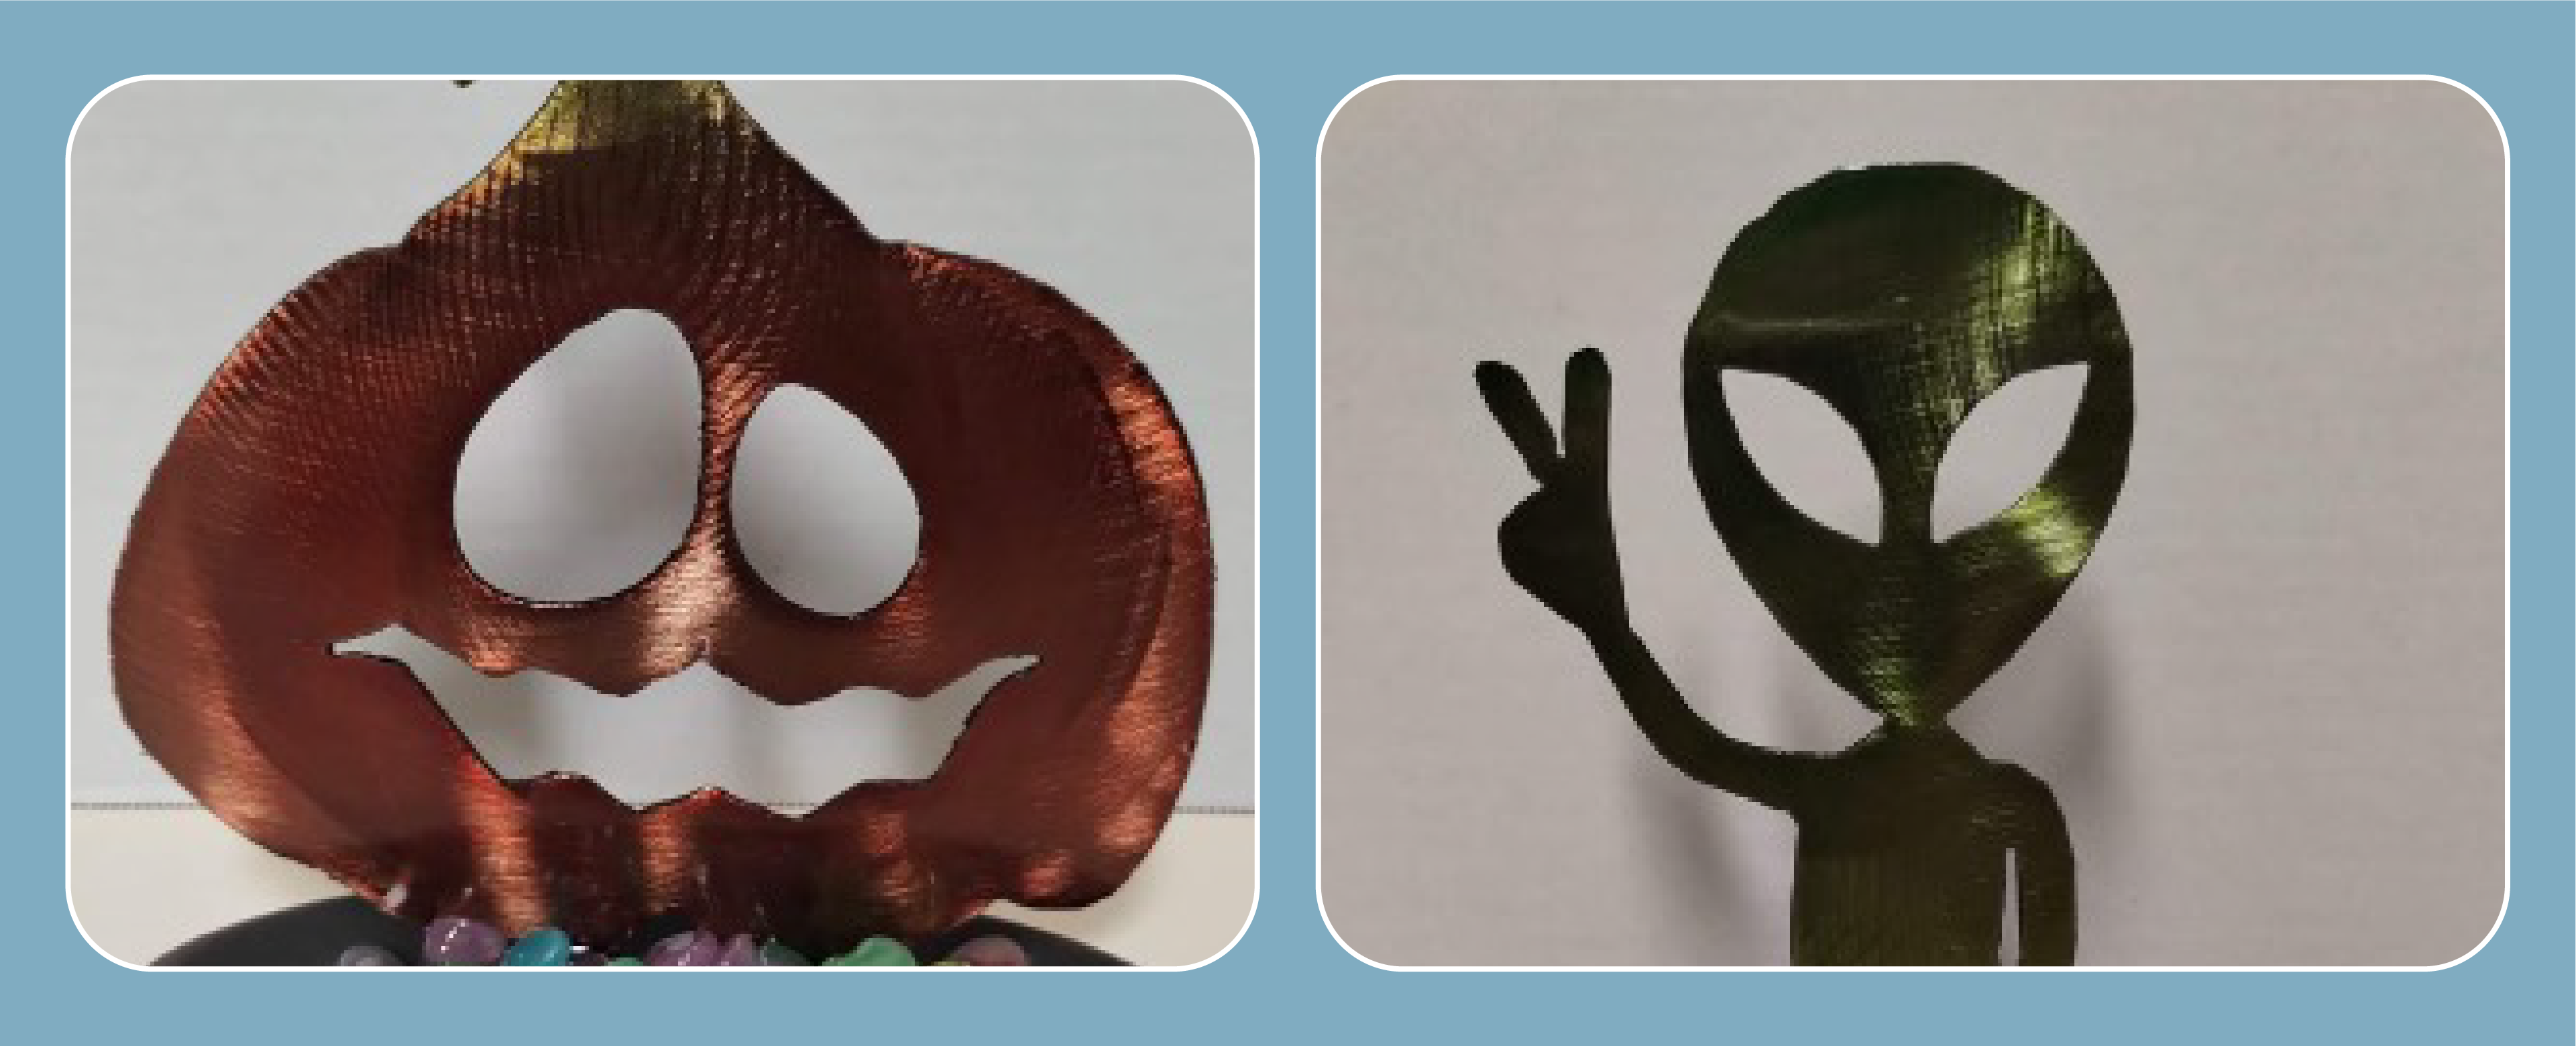 Halloween-themed metal sculptures of a jack-o'-lantern and an alien